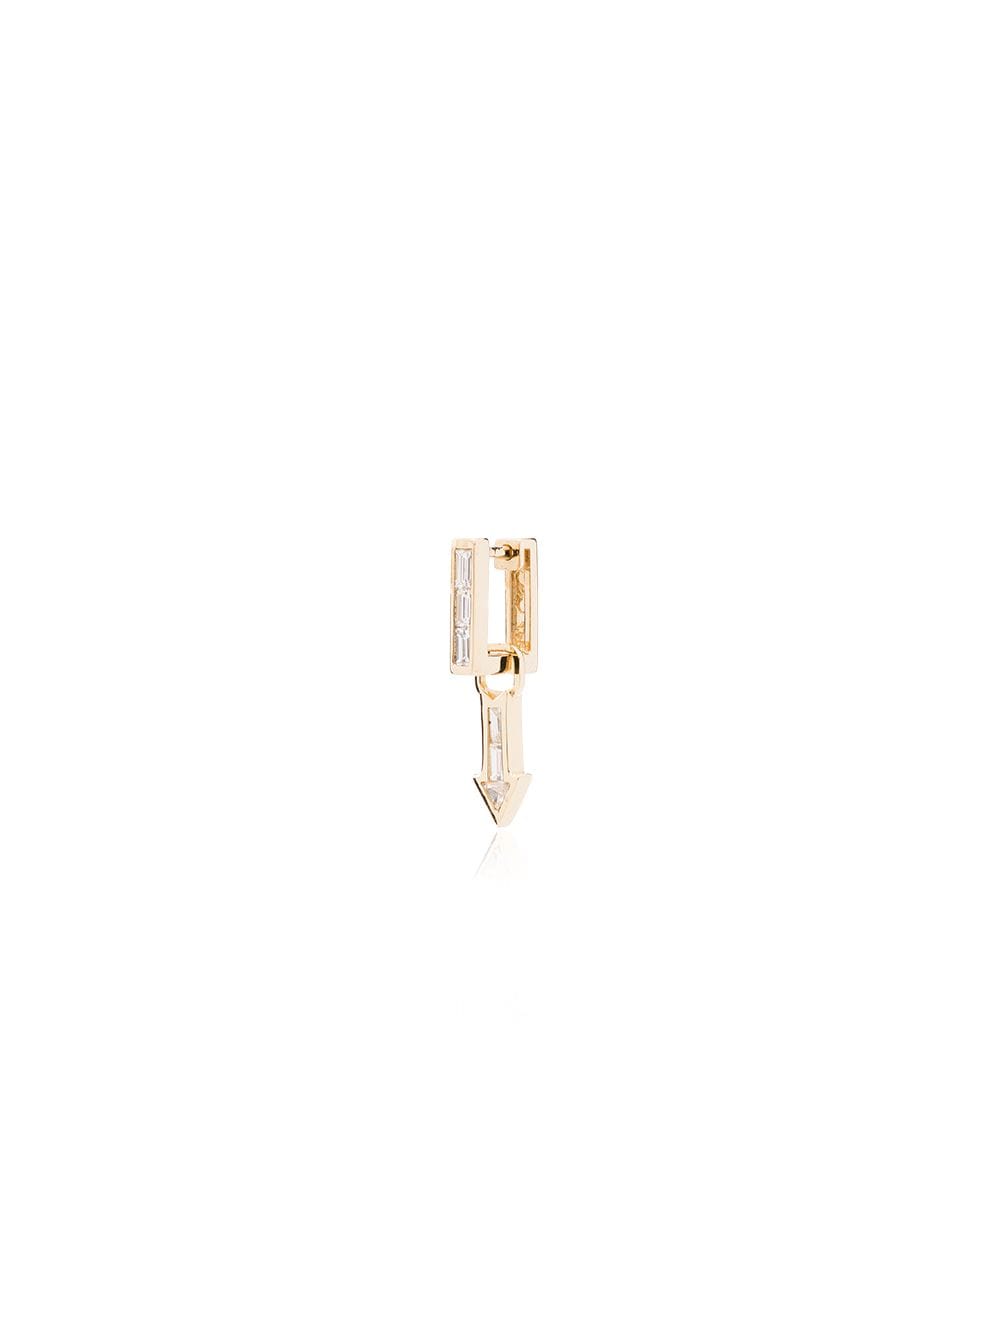 фото Lizzie mandler fine jewelry единичная серьга-подвеска arrow из золота